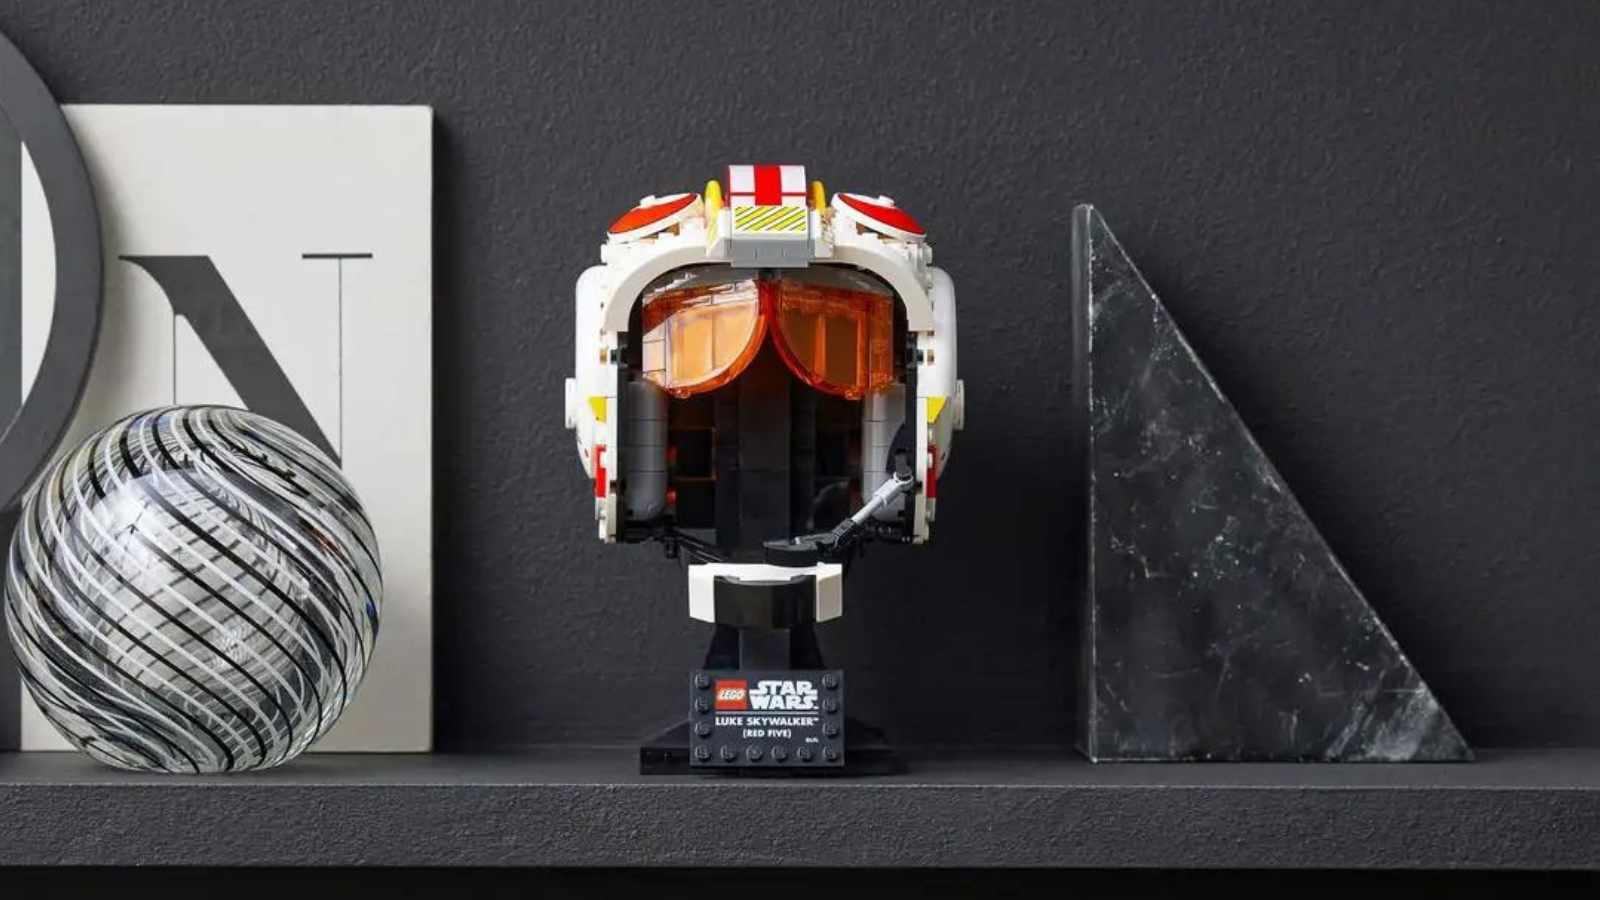 The LEGO Star Wars Luke Skywalker Helmet on display